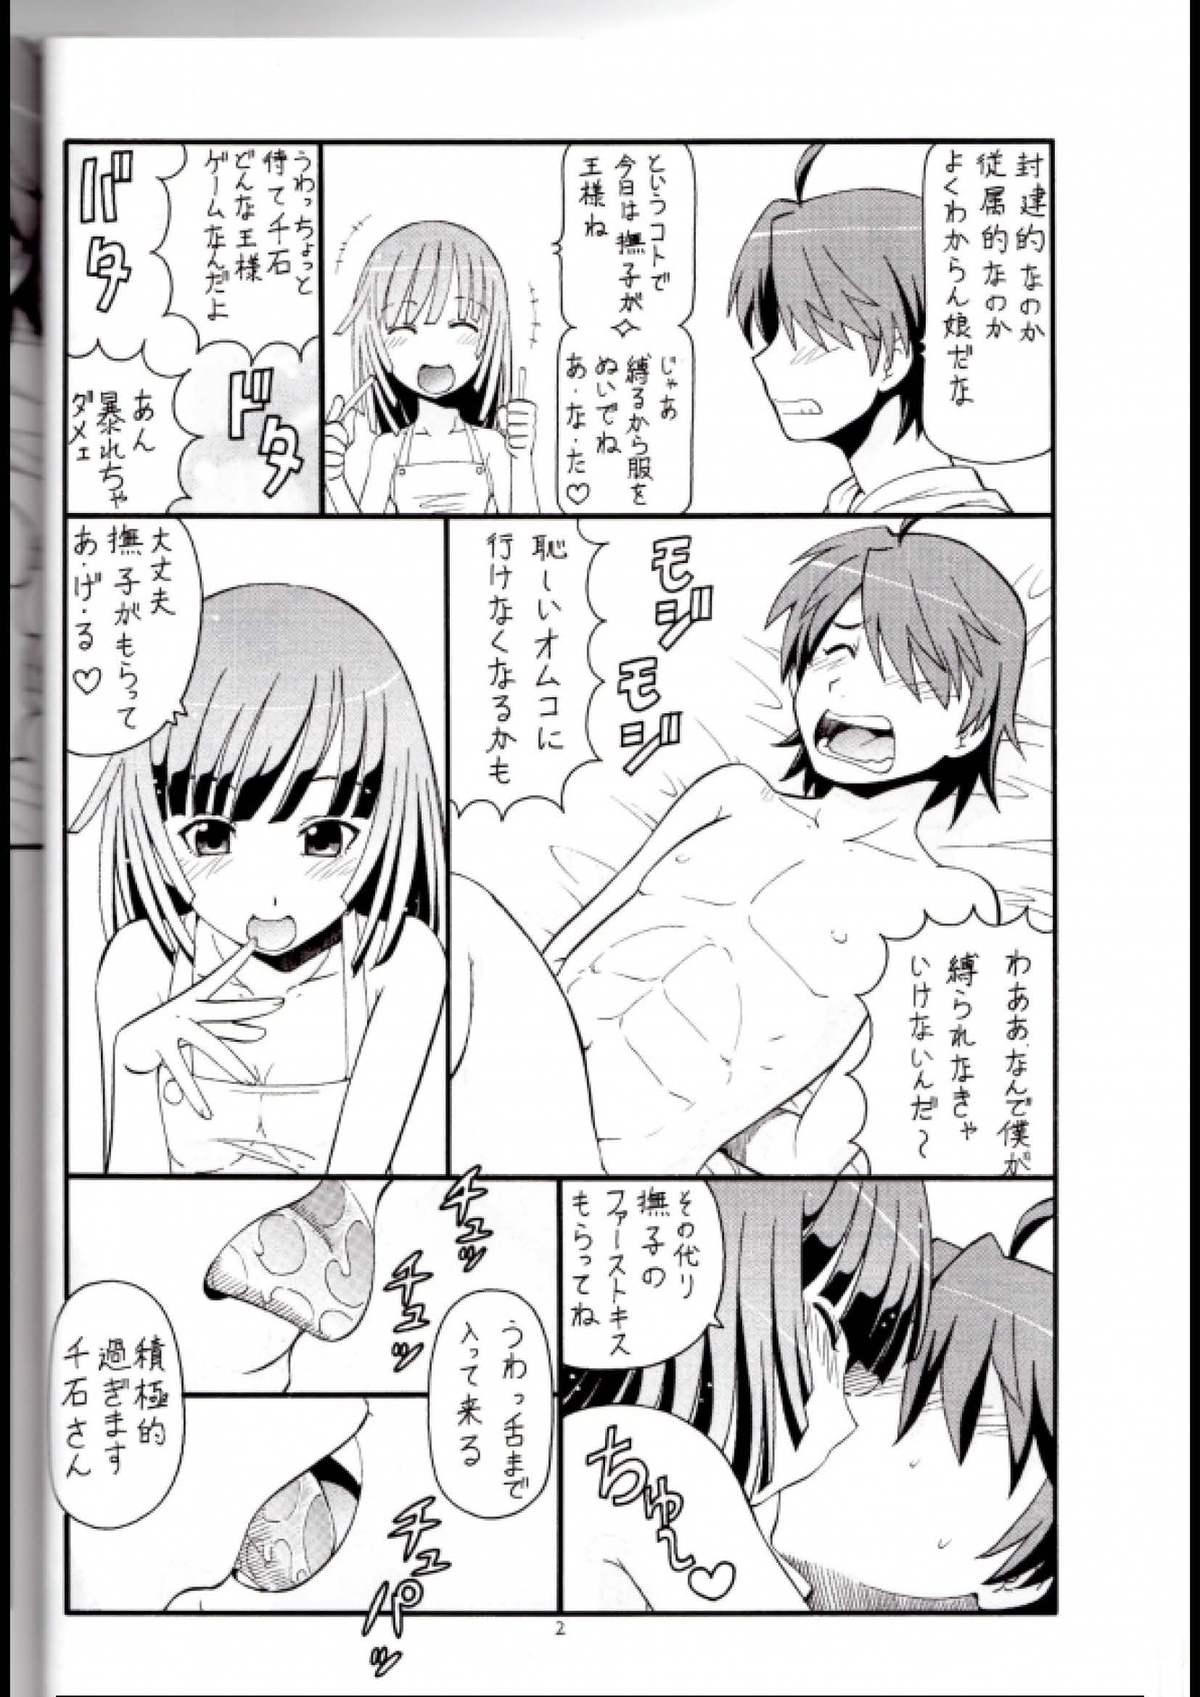 Suck Cock Hito ni Hakanai to Kaite "Araragi" to Yomu 2&3 - Bakemonogatari Insertion - Page 3